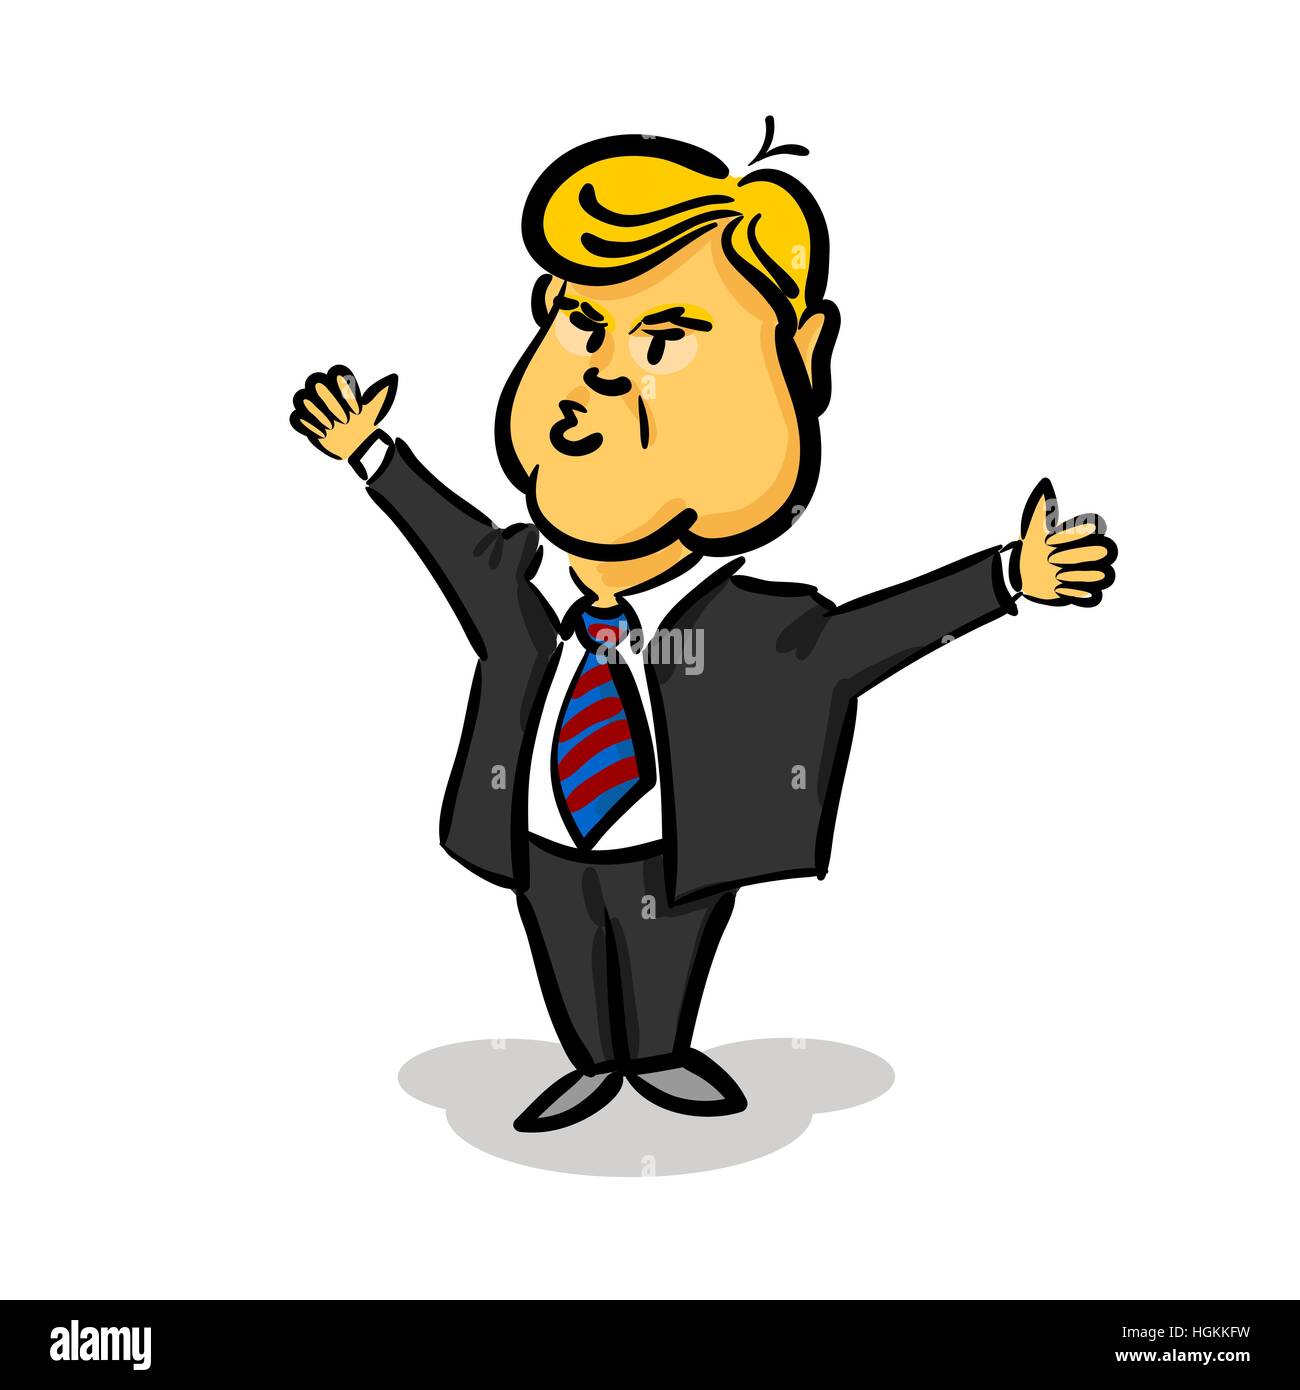 January 10, 2017 Donald Trump thumb up Stock Vector